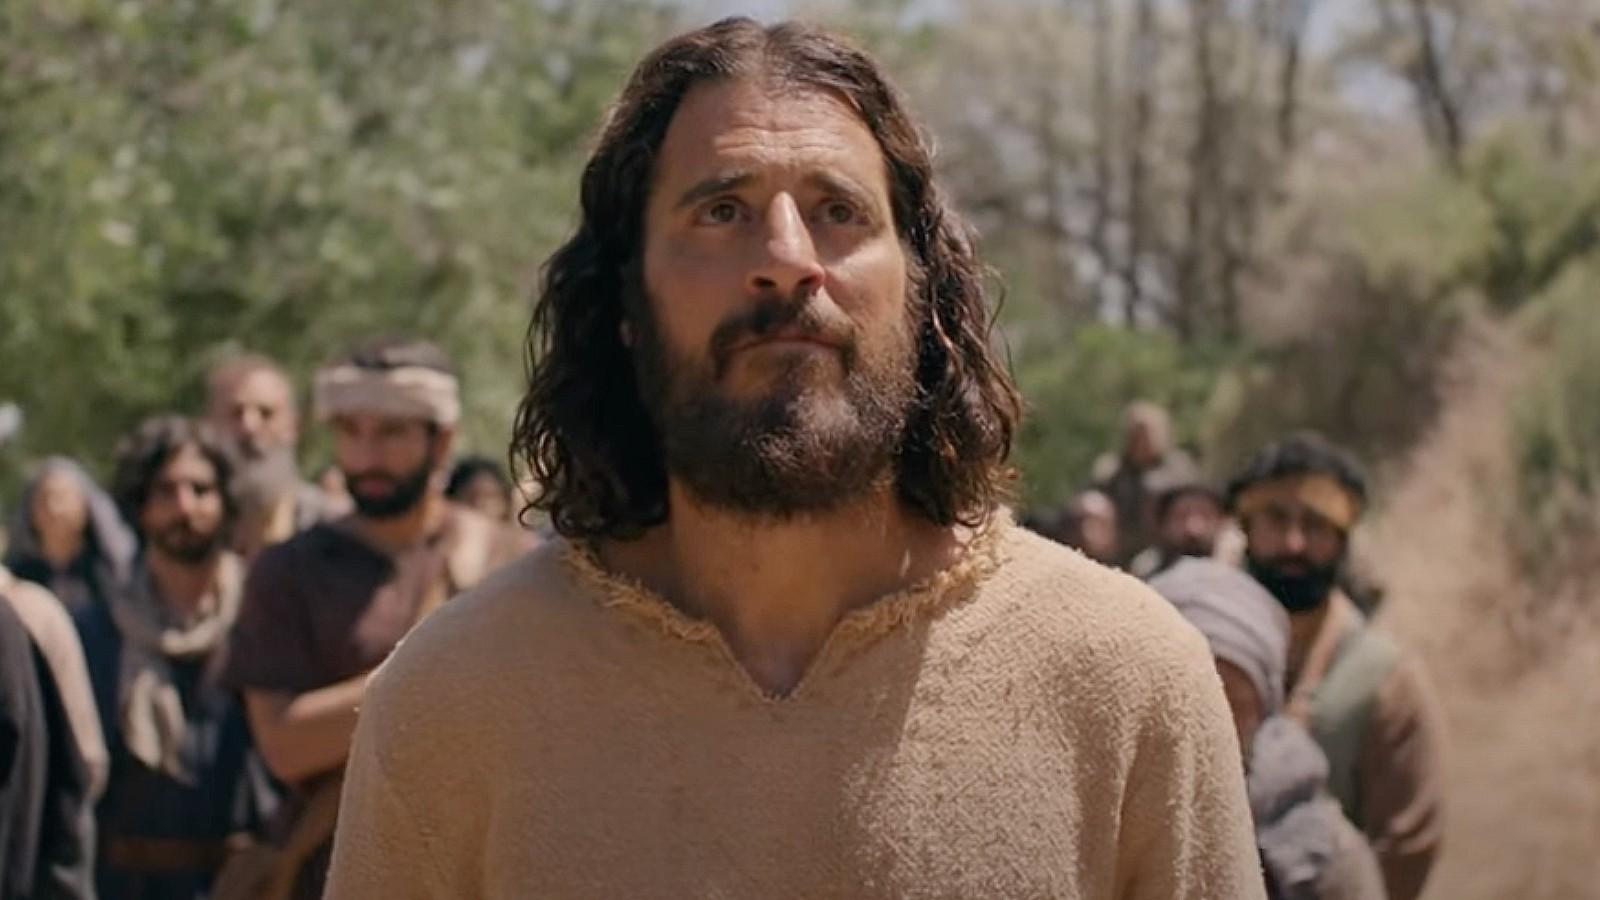 Jesus in The Chosen Season 4